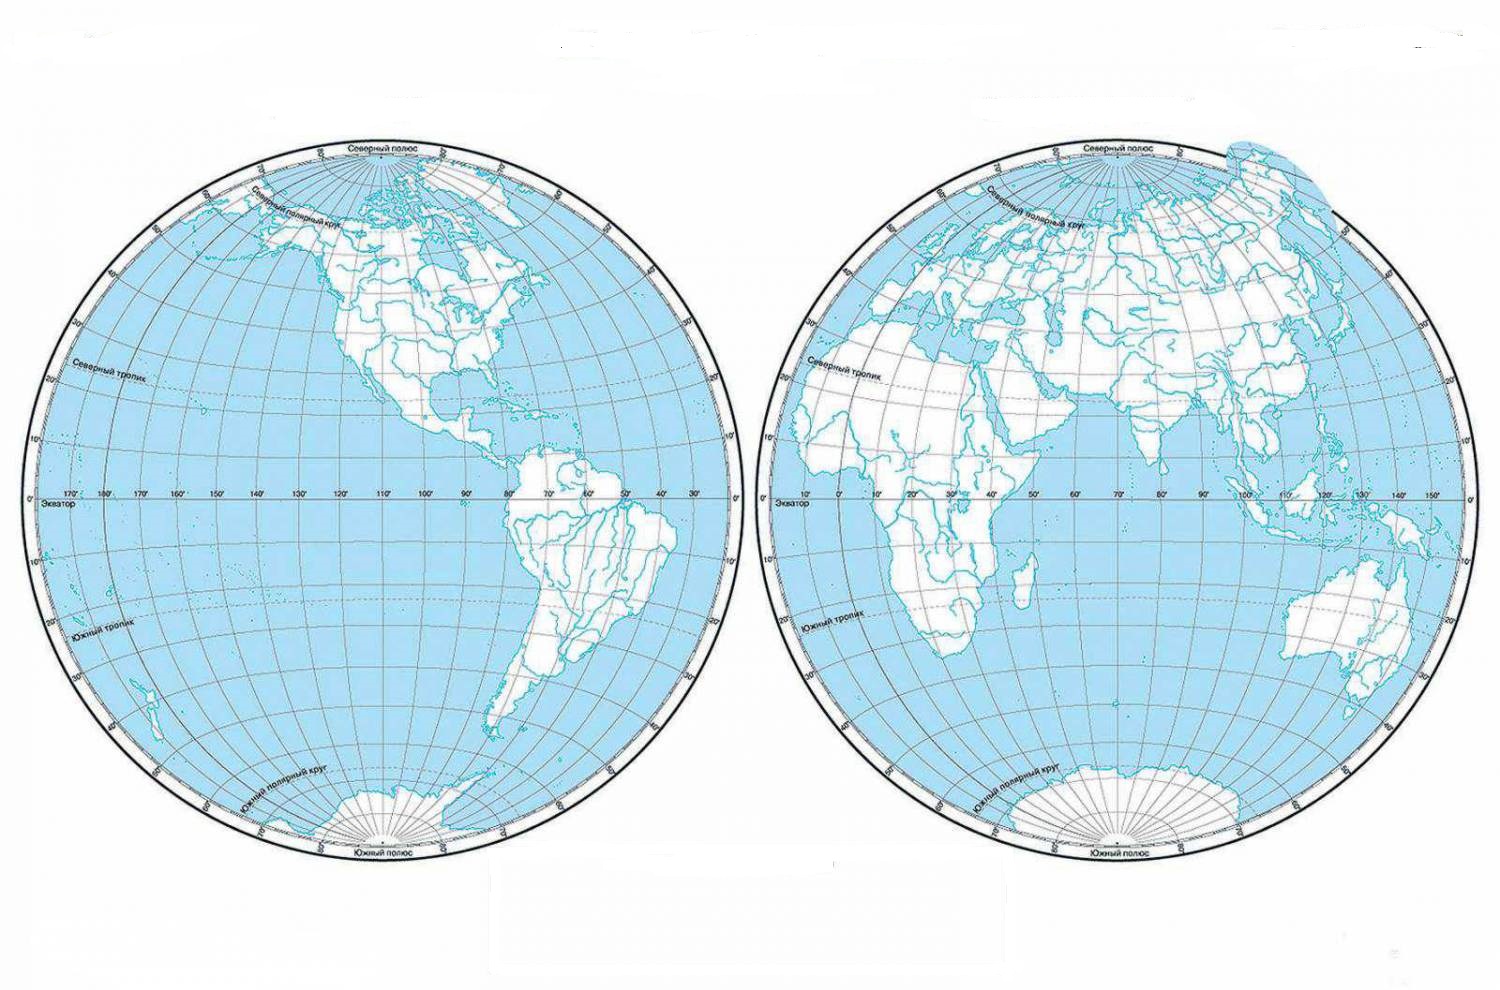 Два полушария земли картинка